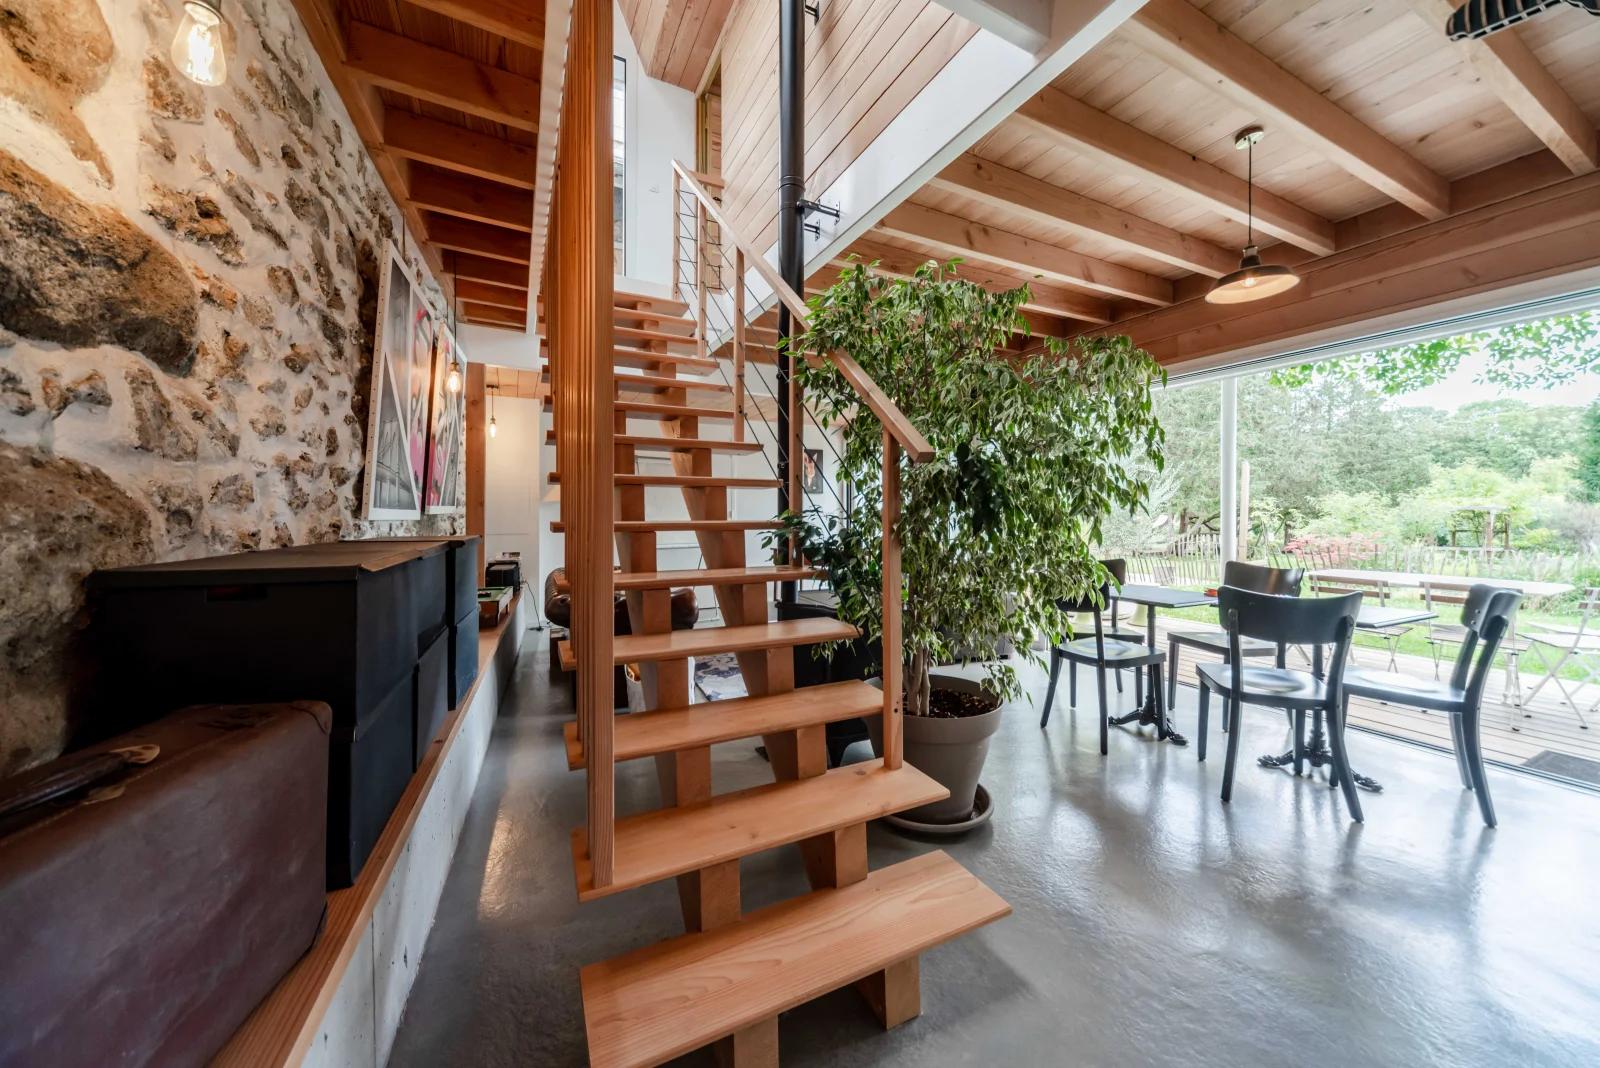 Comedor dentro Casa "loft" de madera diseñada por un arquitecto cerca de París - 5